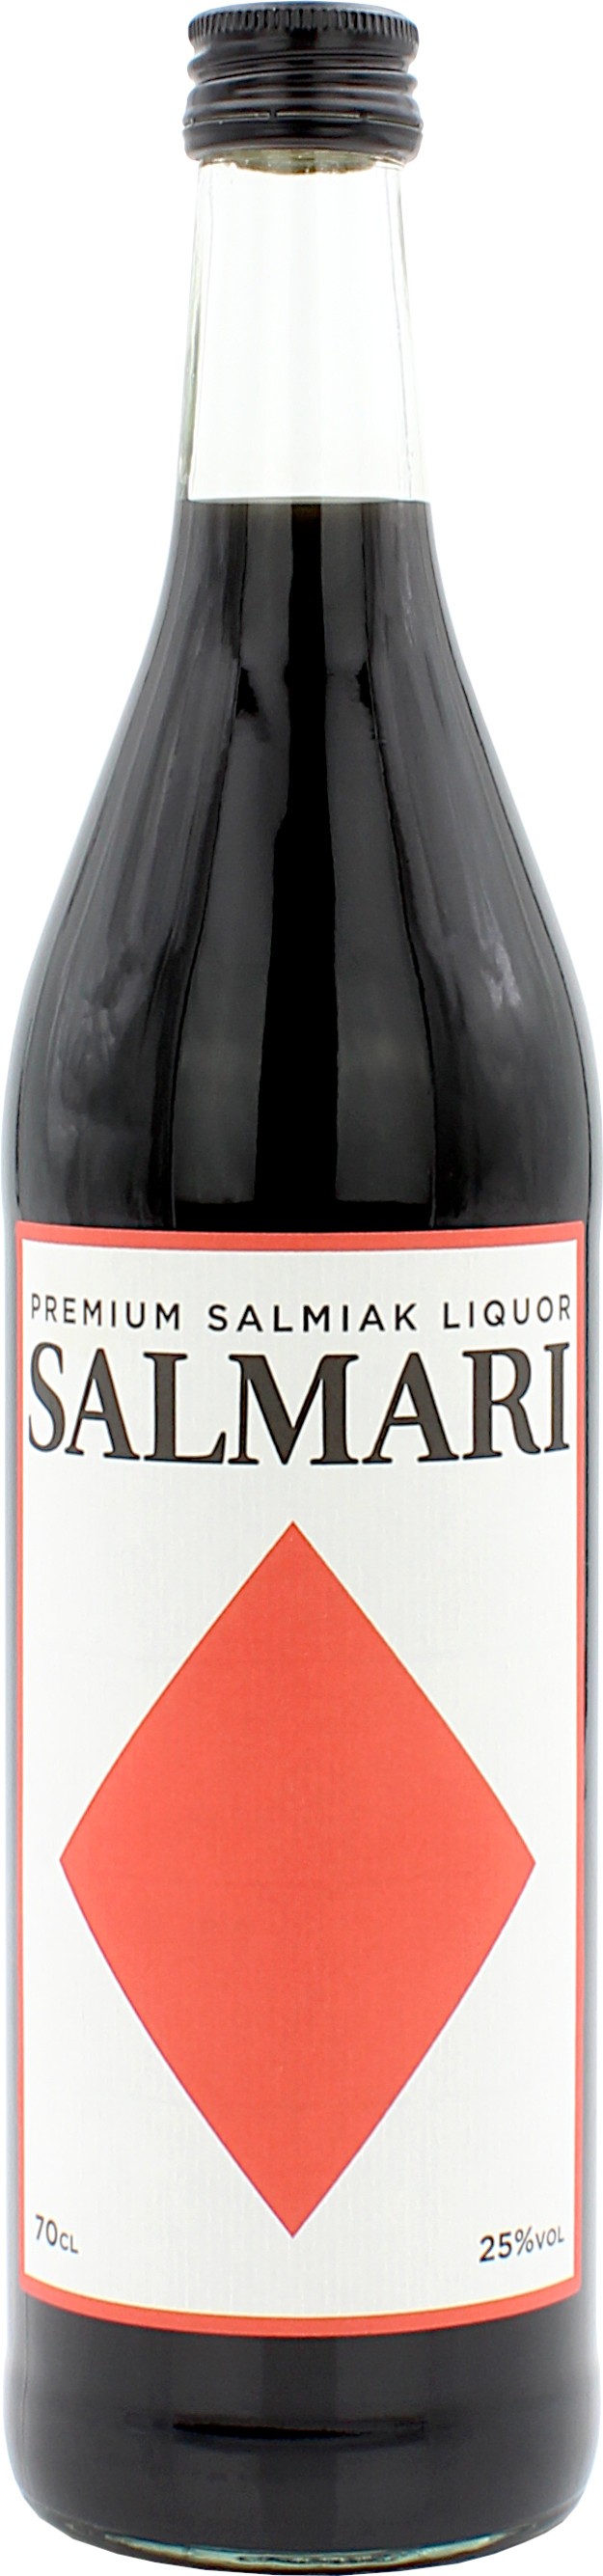 Salmari Premium Salmiak Lakritz Likör 25.0% 0,7l